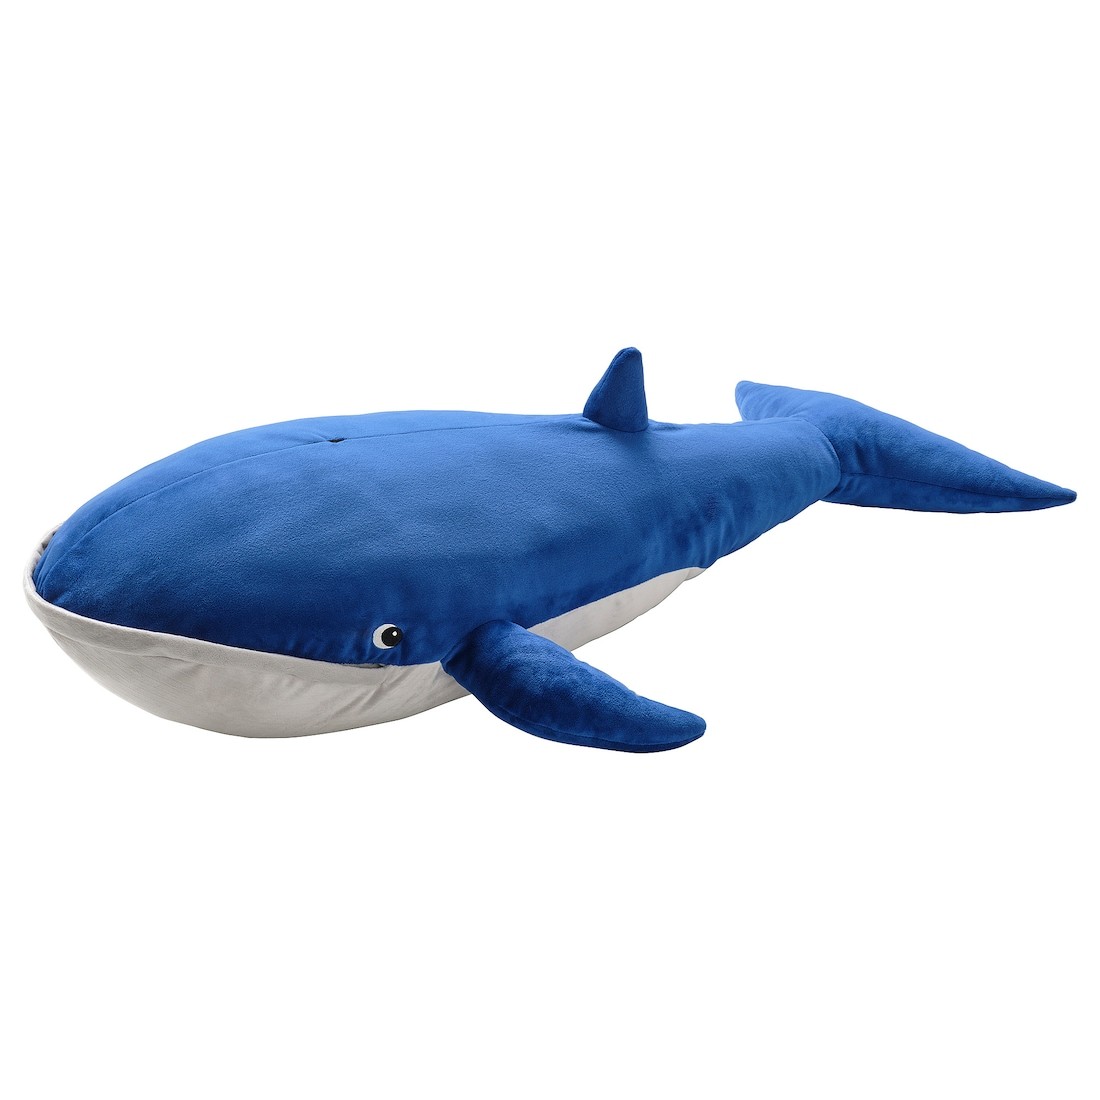 IKEA BLÅVINGAD Іграшка м’яка, синій кит, 100 см 00522113 | 005.221.13